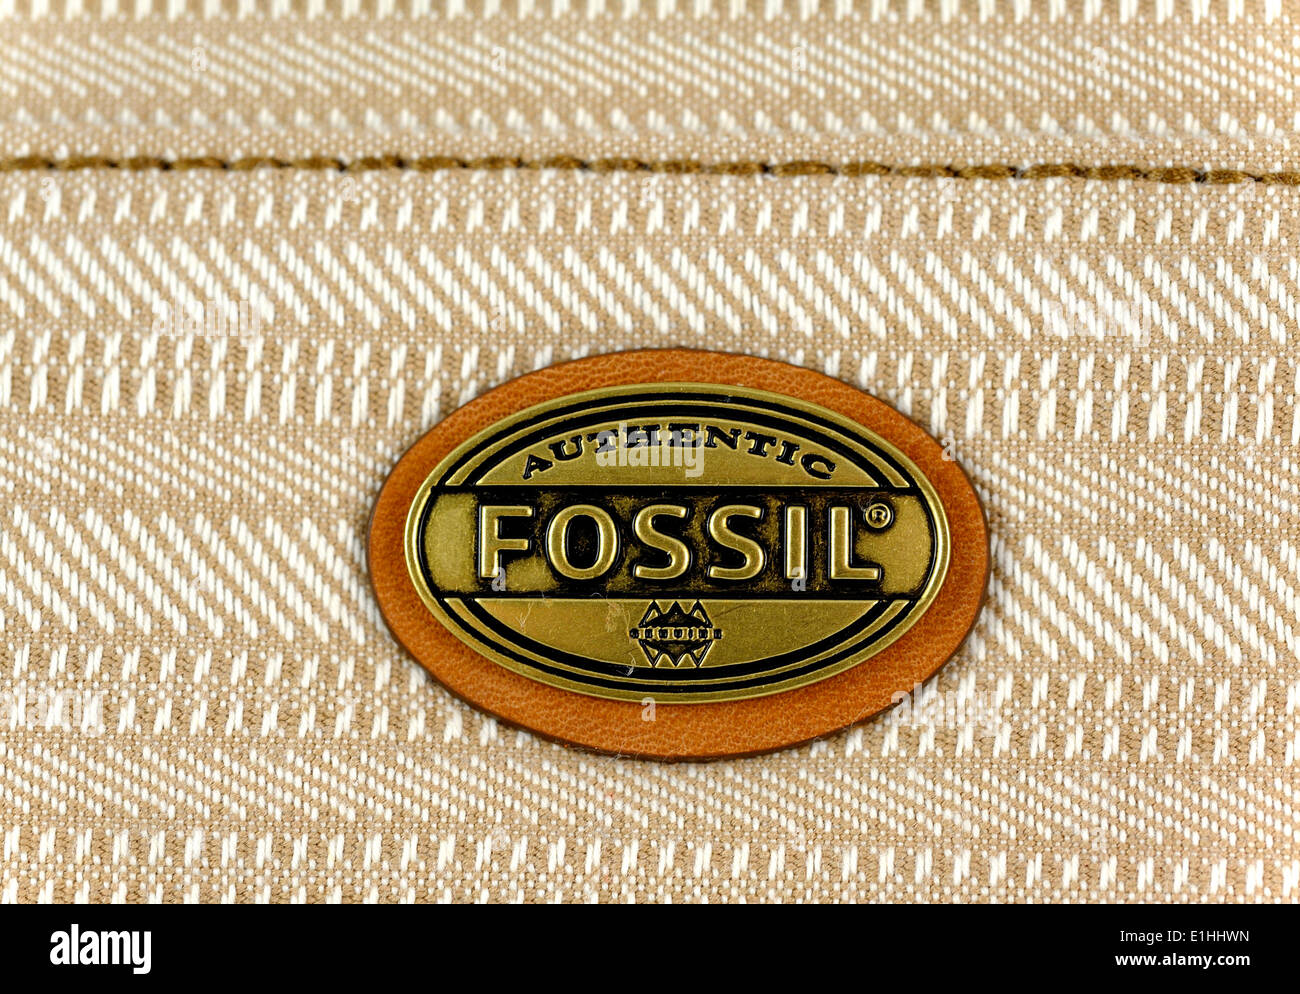 Fossil brand logo badge on a shoulder bag close up detail Stock Photo